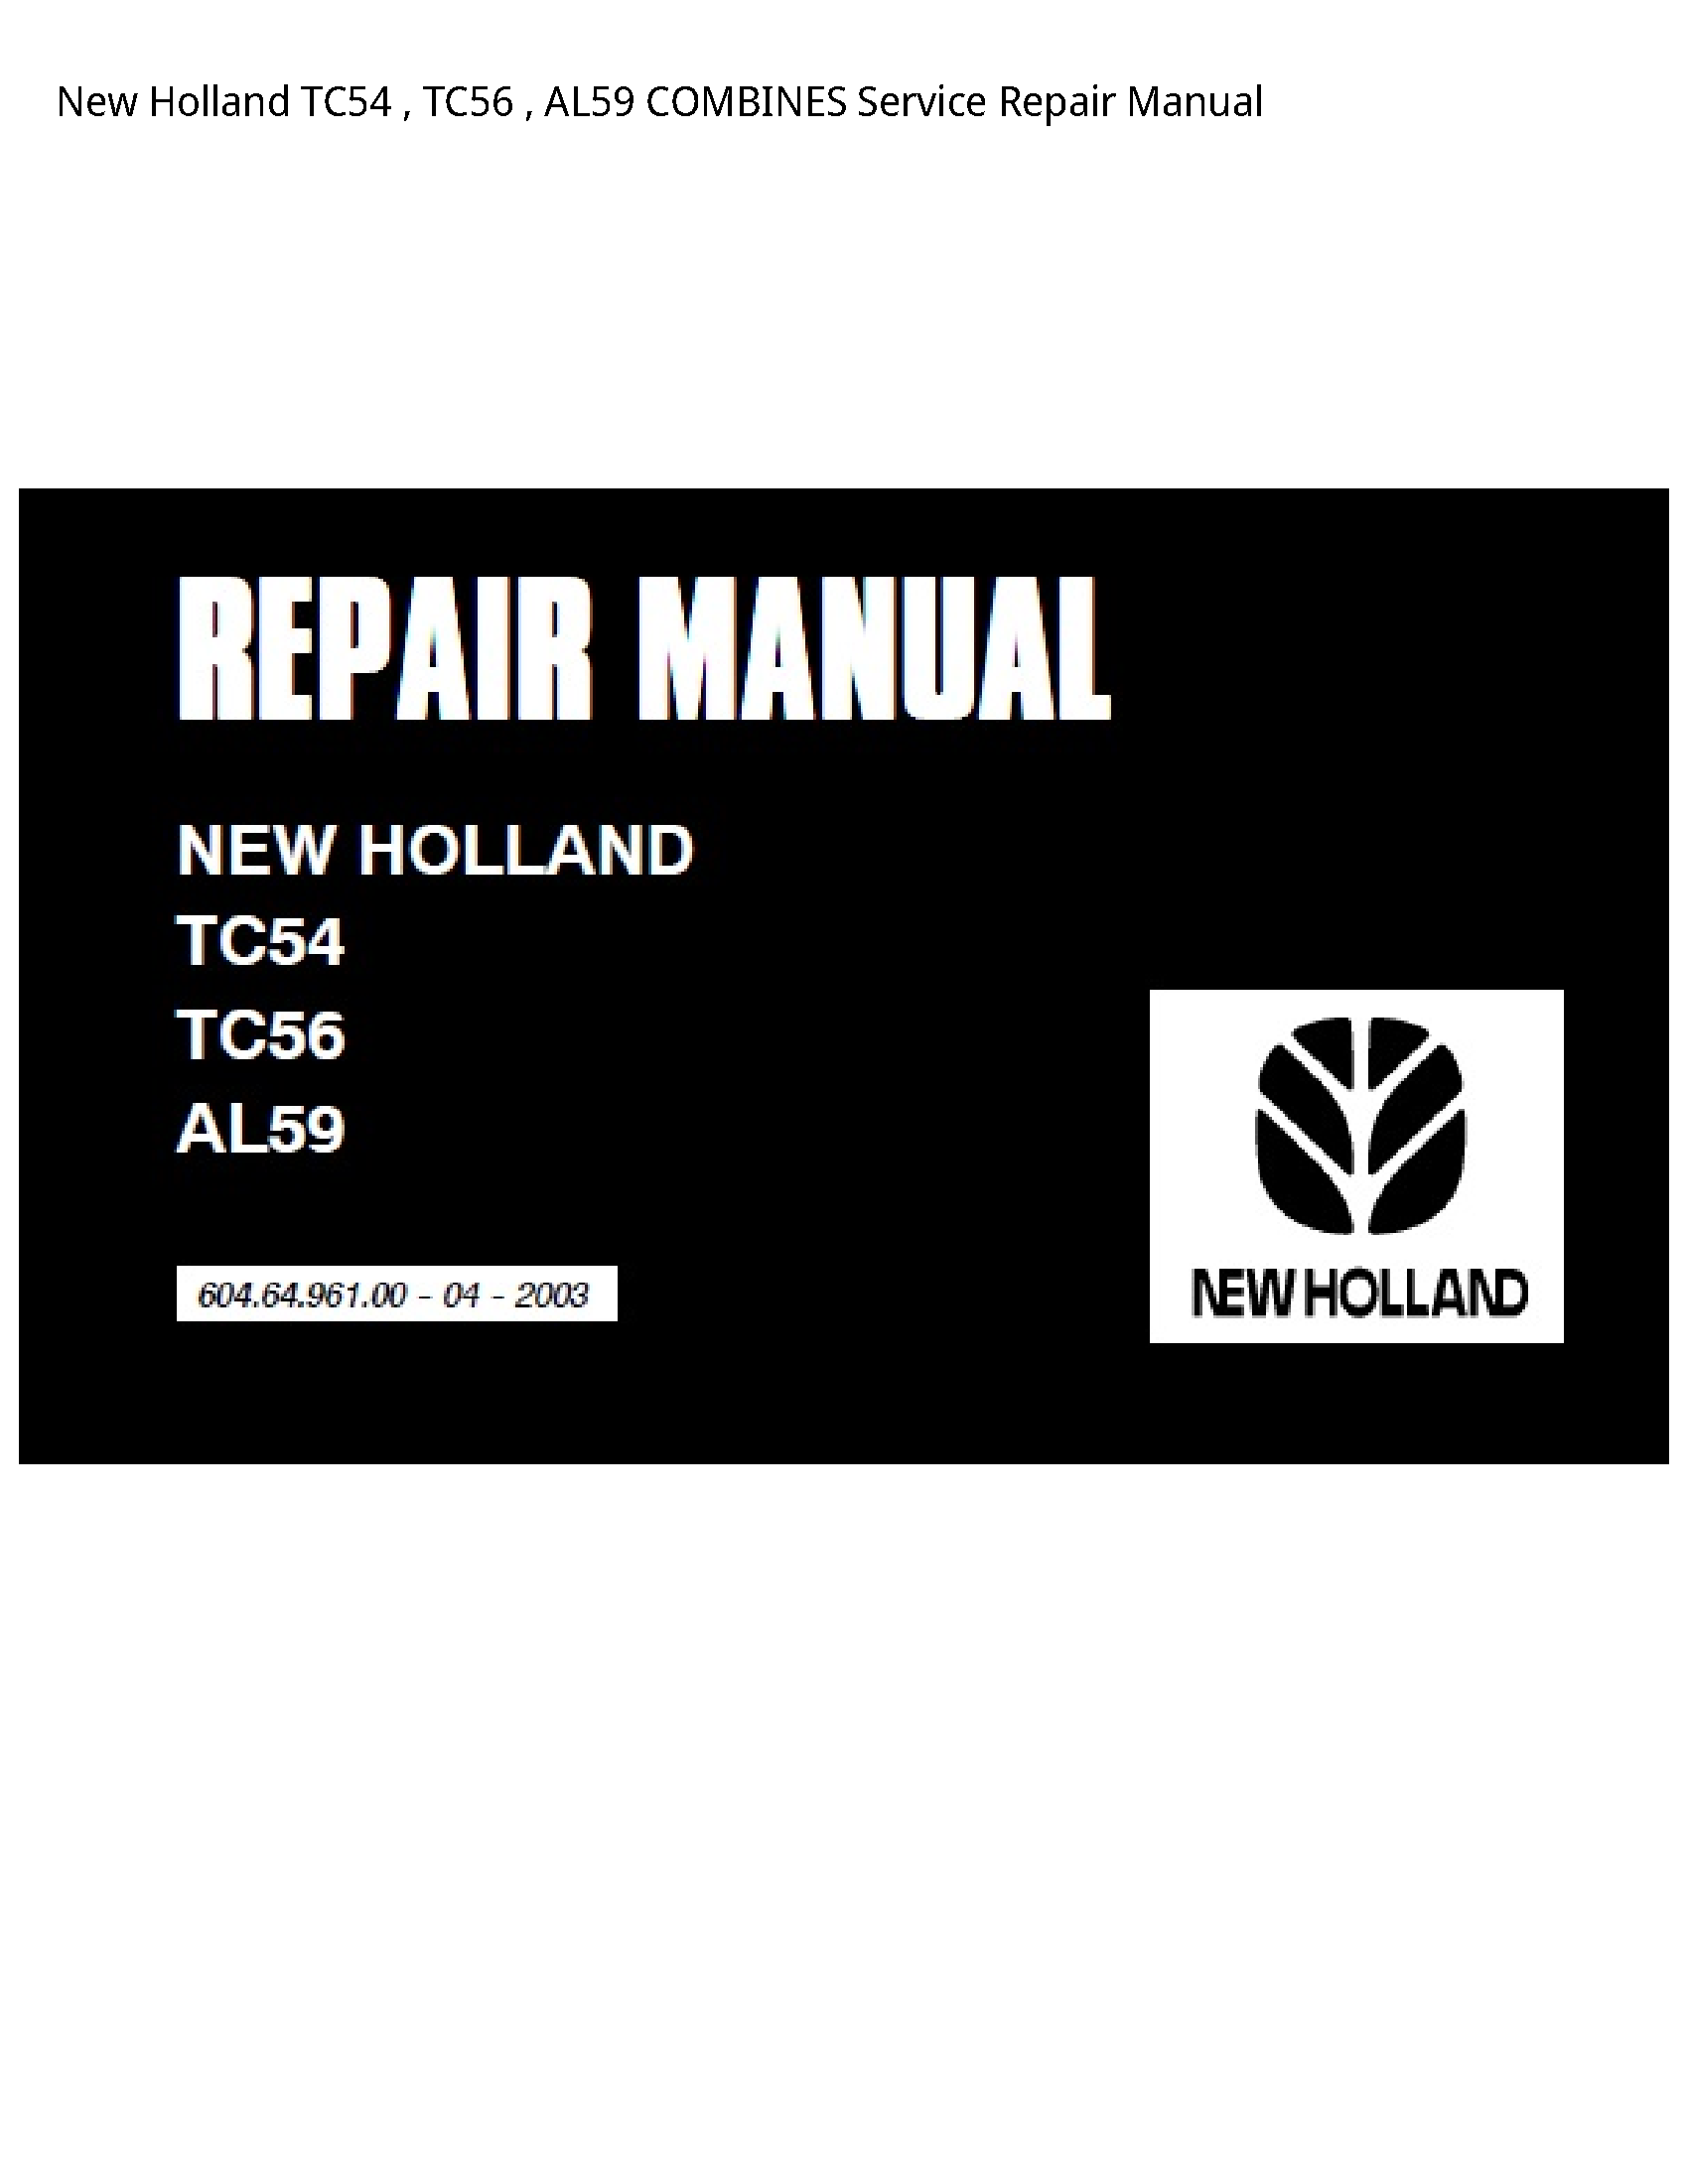 New Holland TC54 COMBINES manual